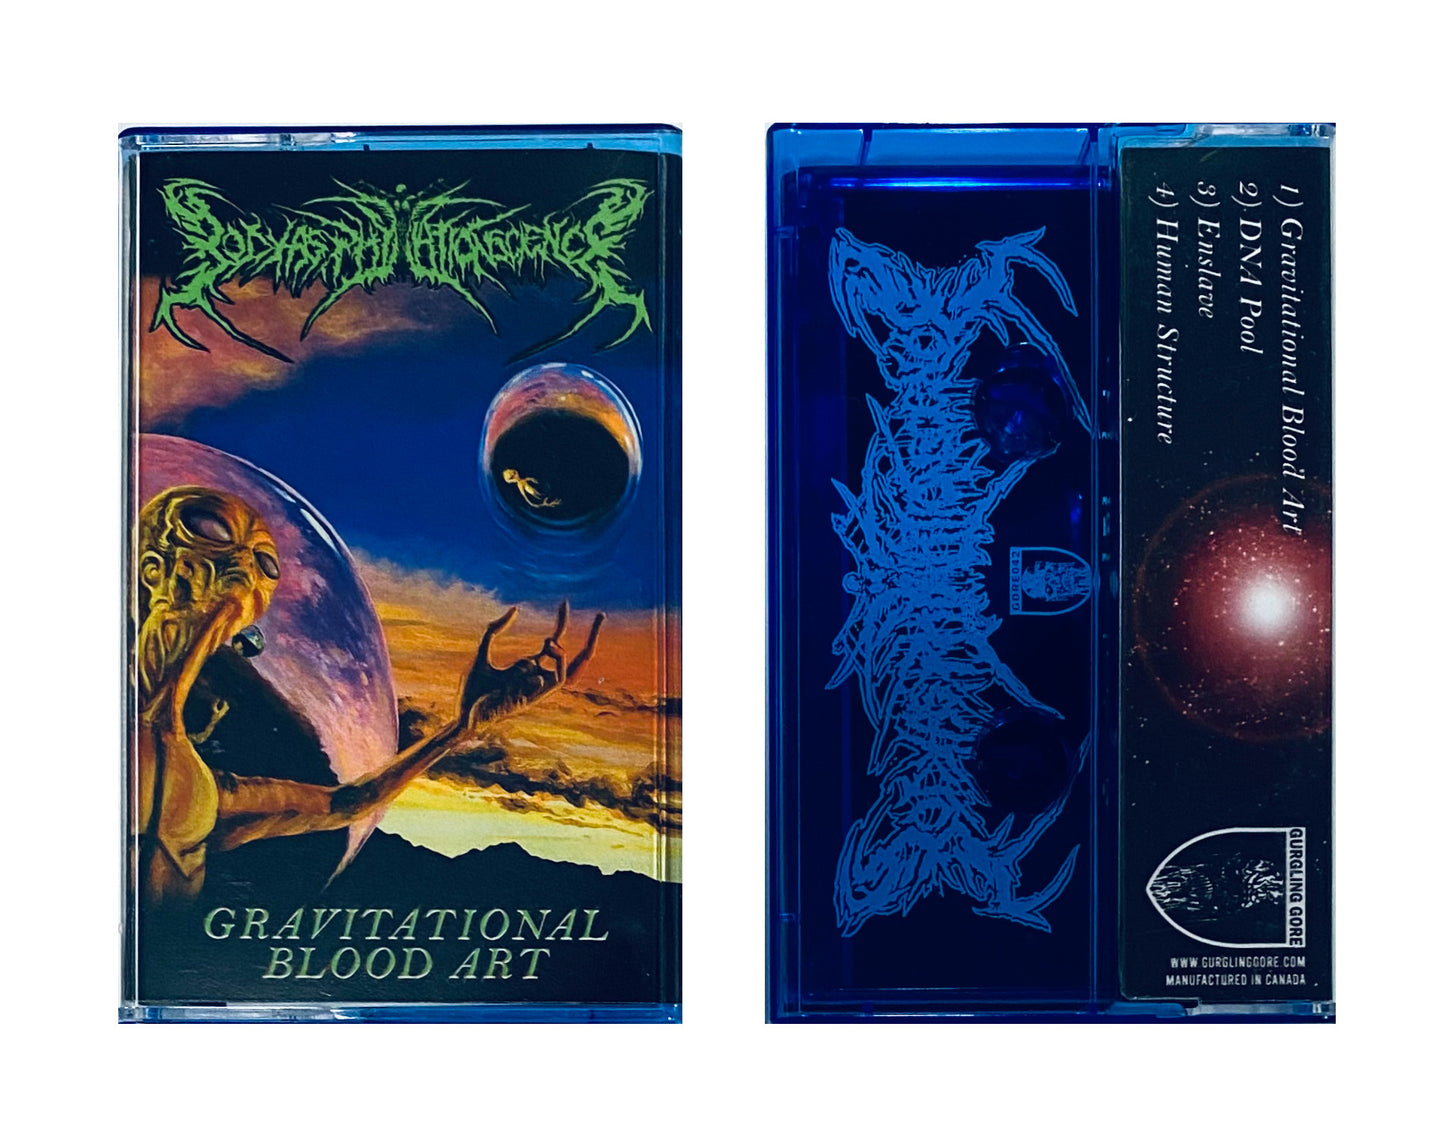 Body Asphyxiation Science - Gravitational Blood Art cassette